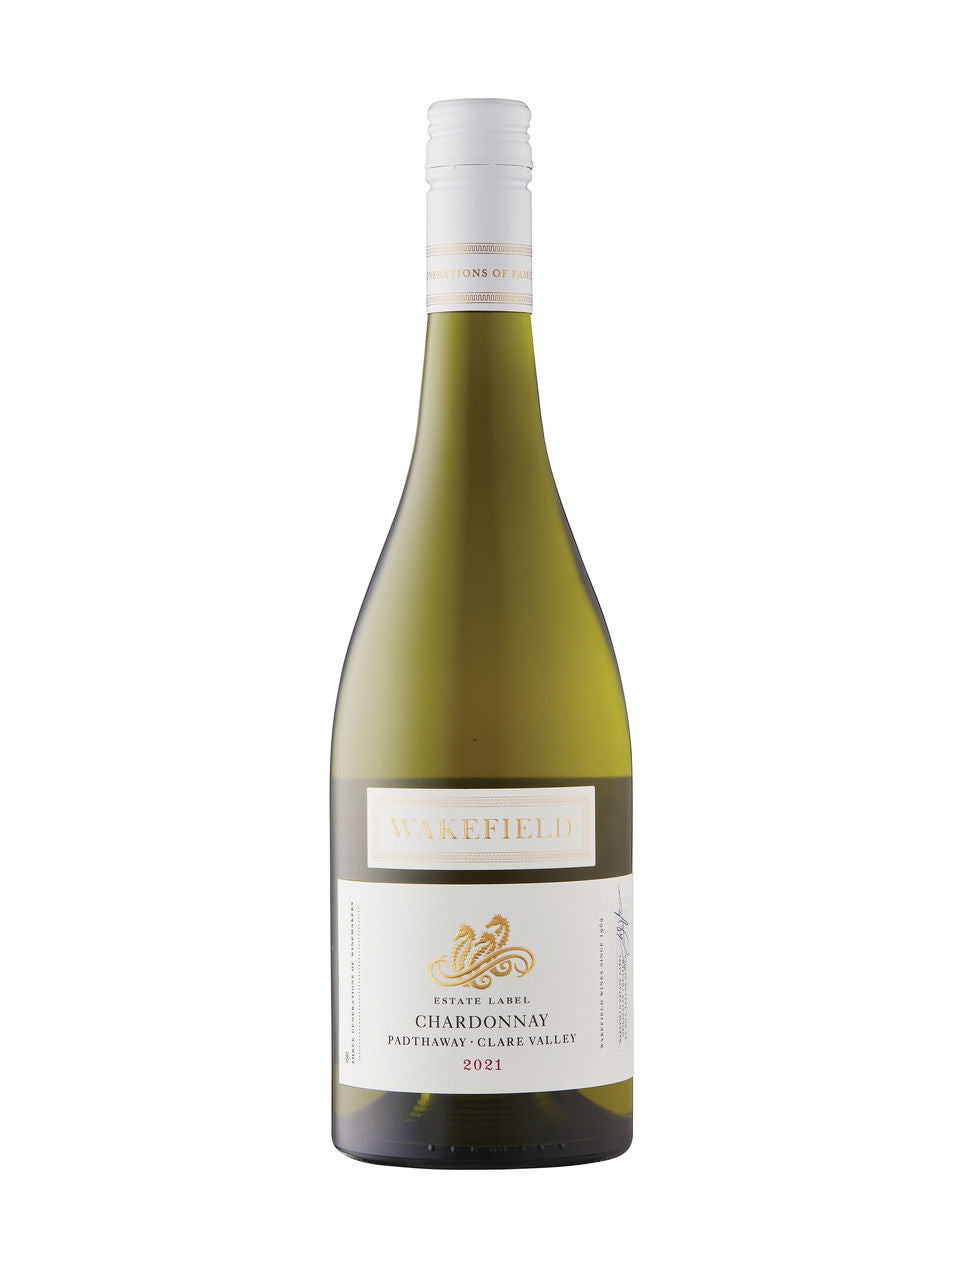 Wakefield Estate Label Chardonnay 2021 750 mL bottle  VINTAGES